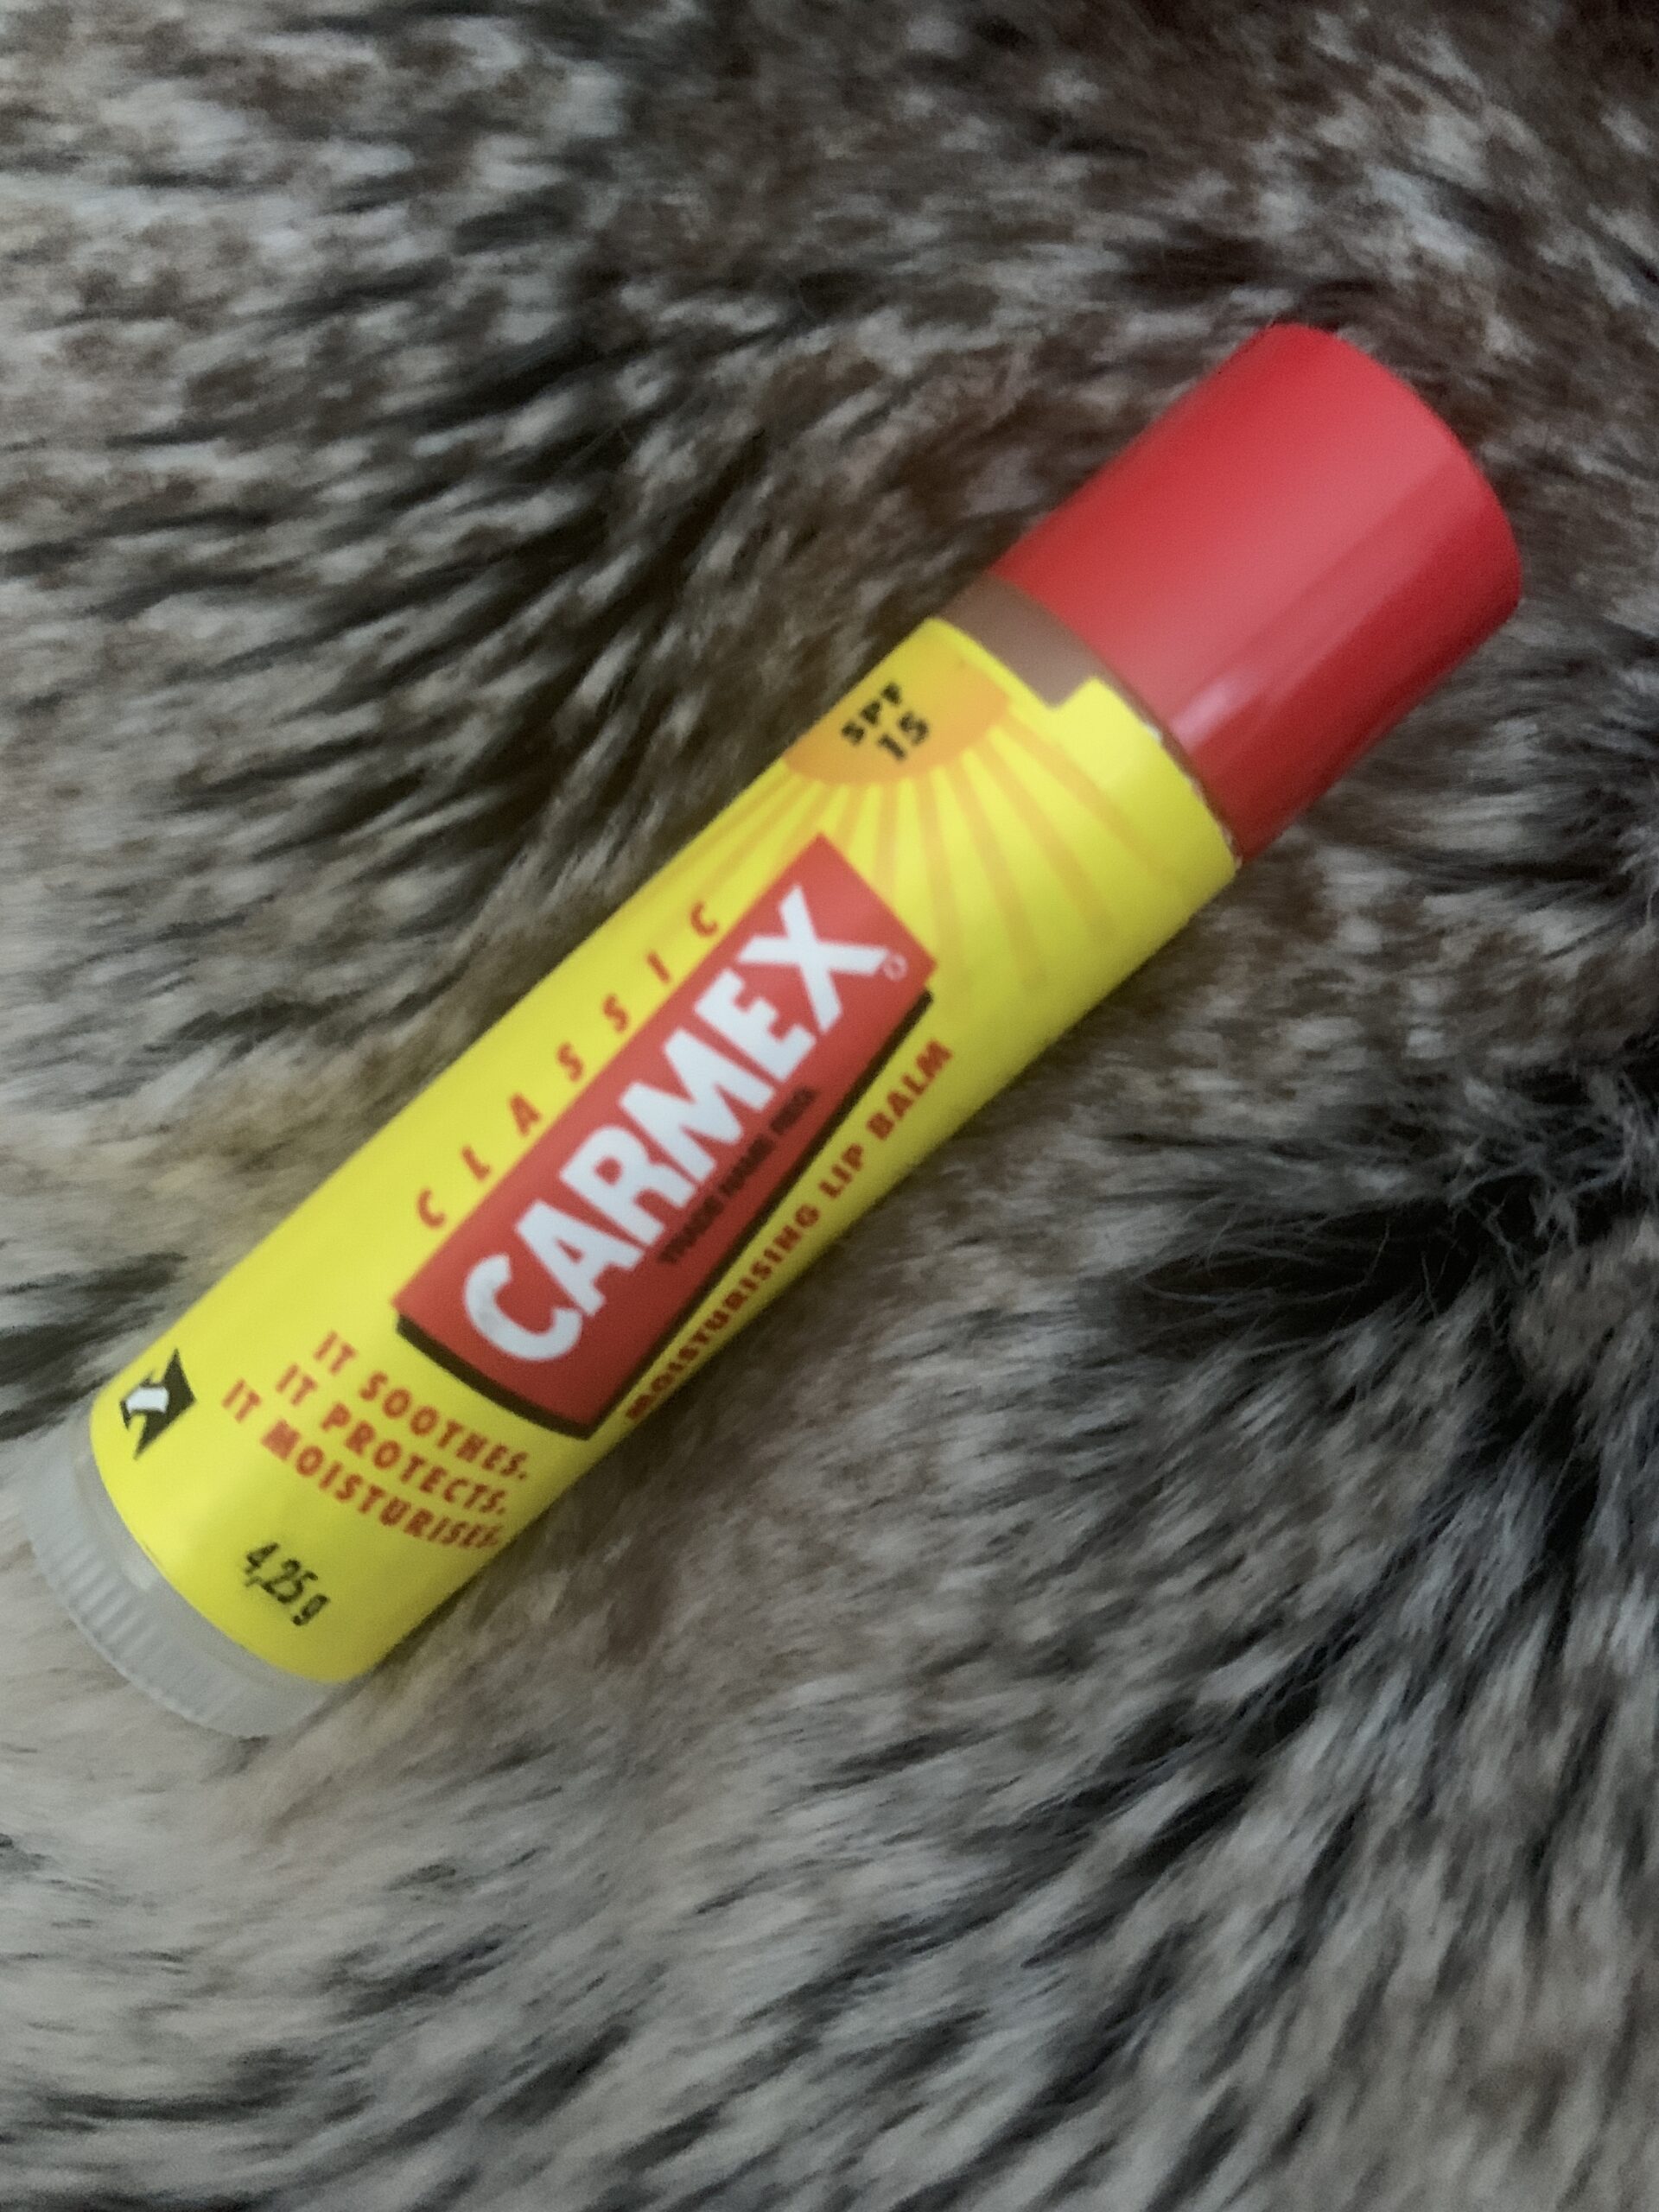 Carmex classic moisturizing lip balm